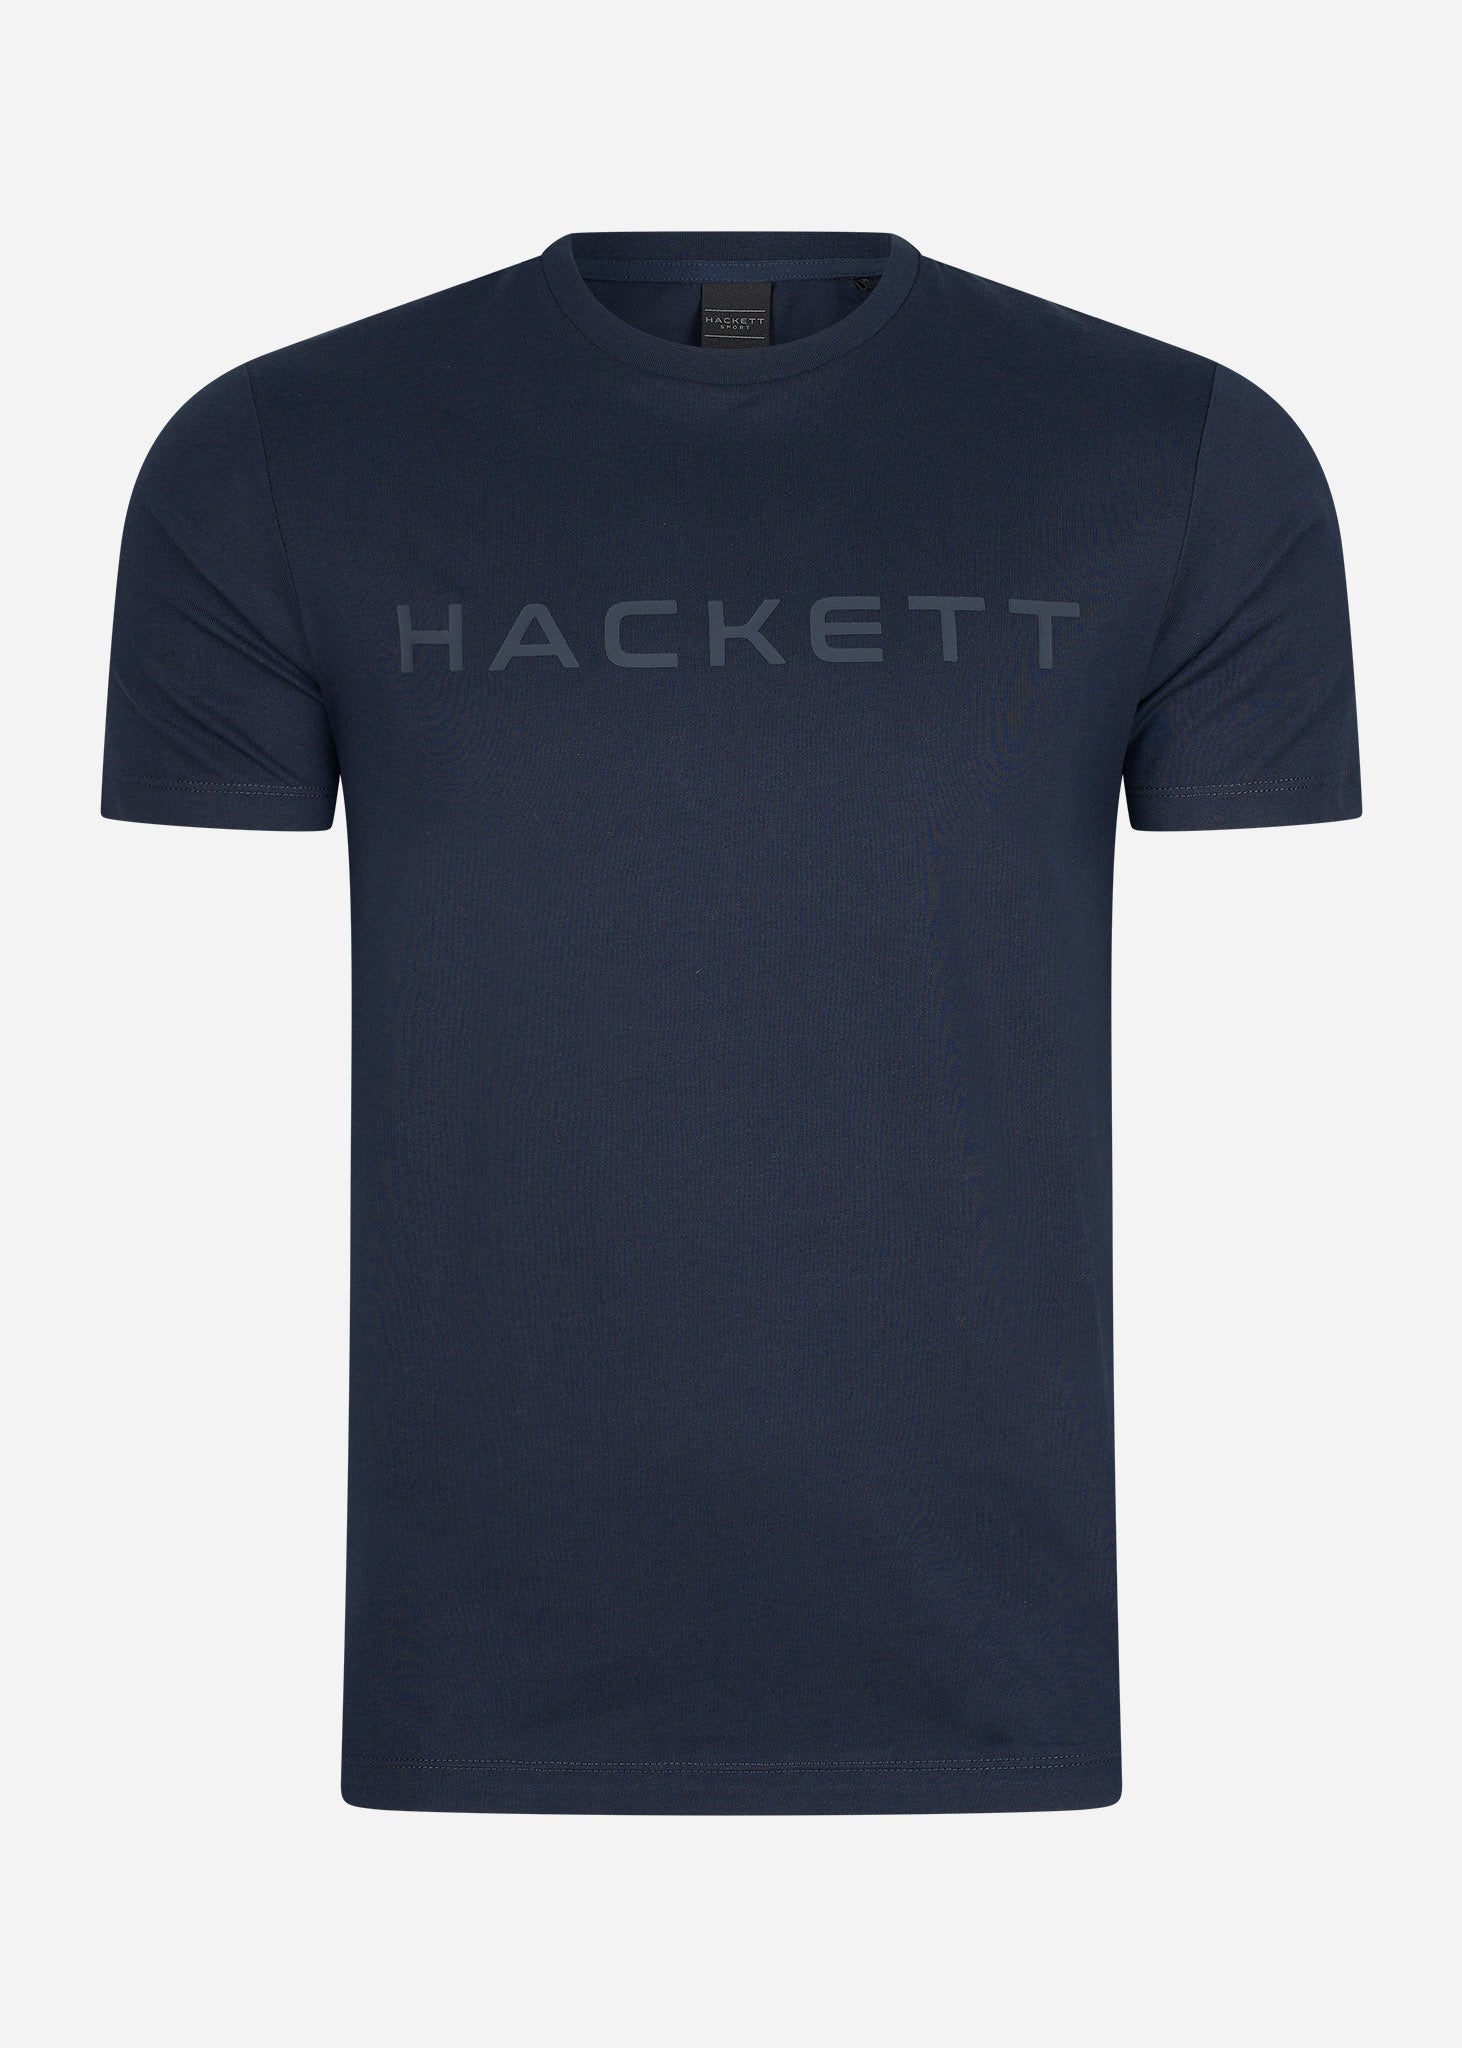 Hackett London T-shirts  Essential tee - navy 